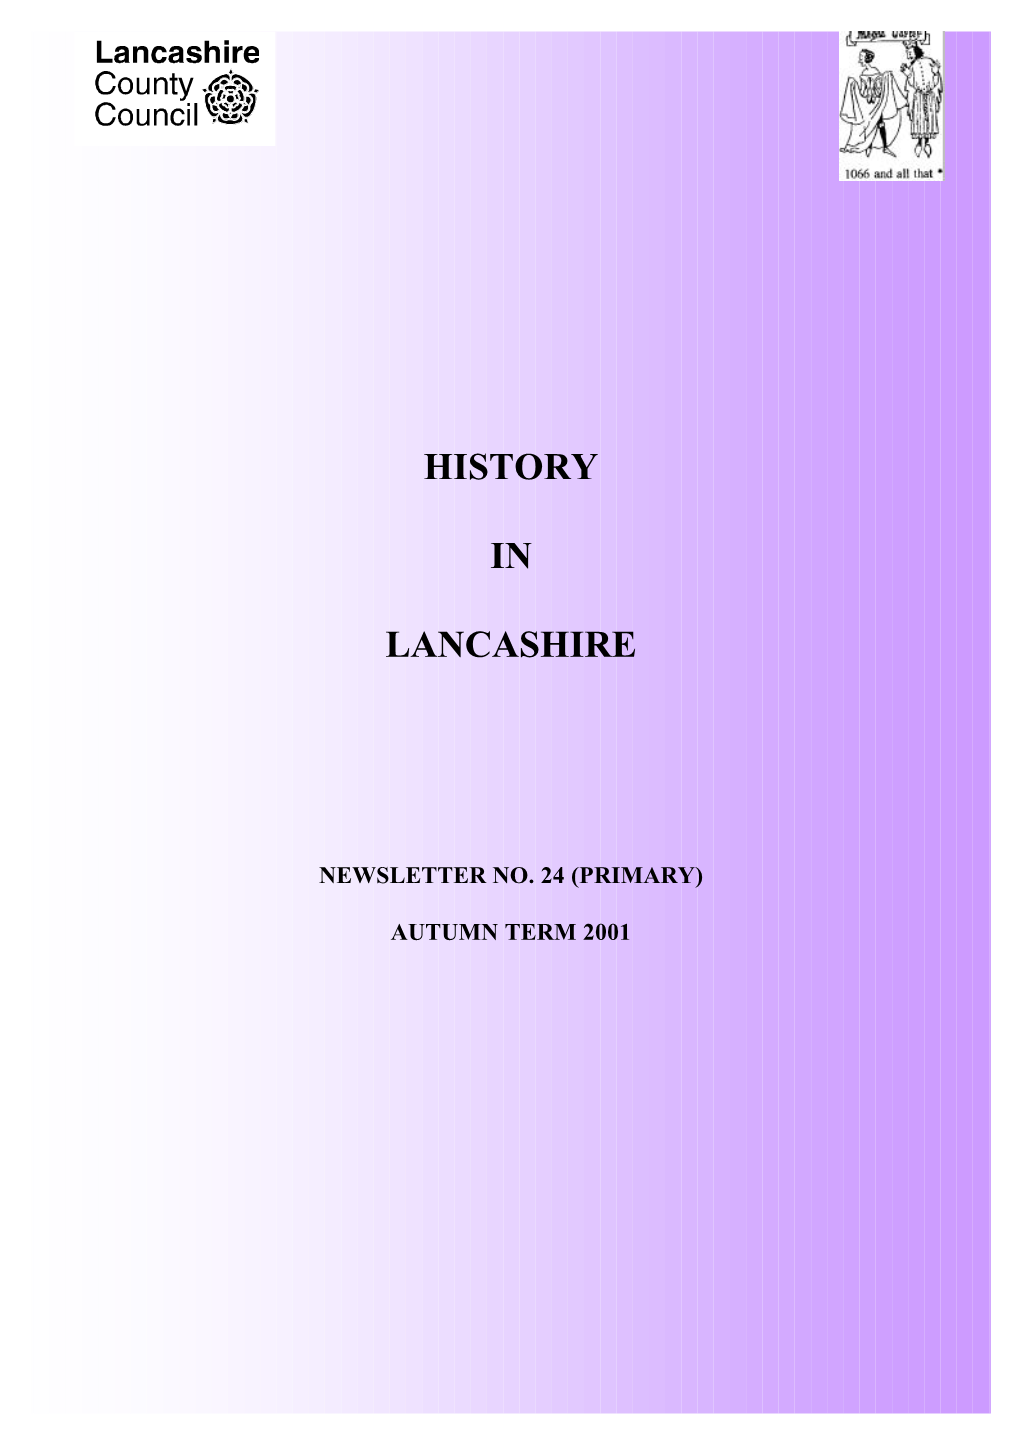 History in Lancashire